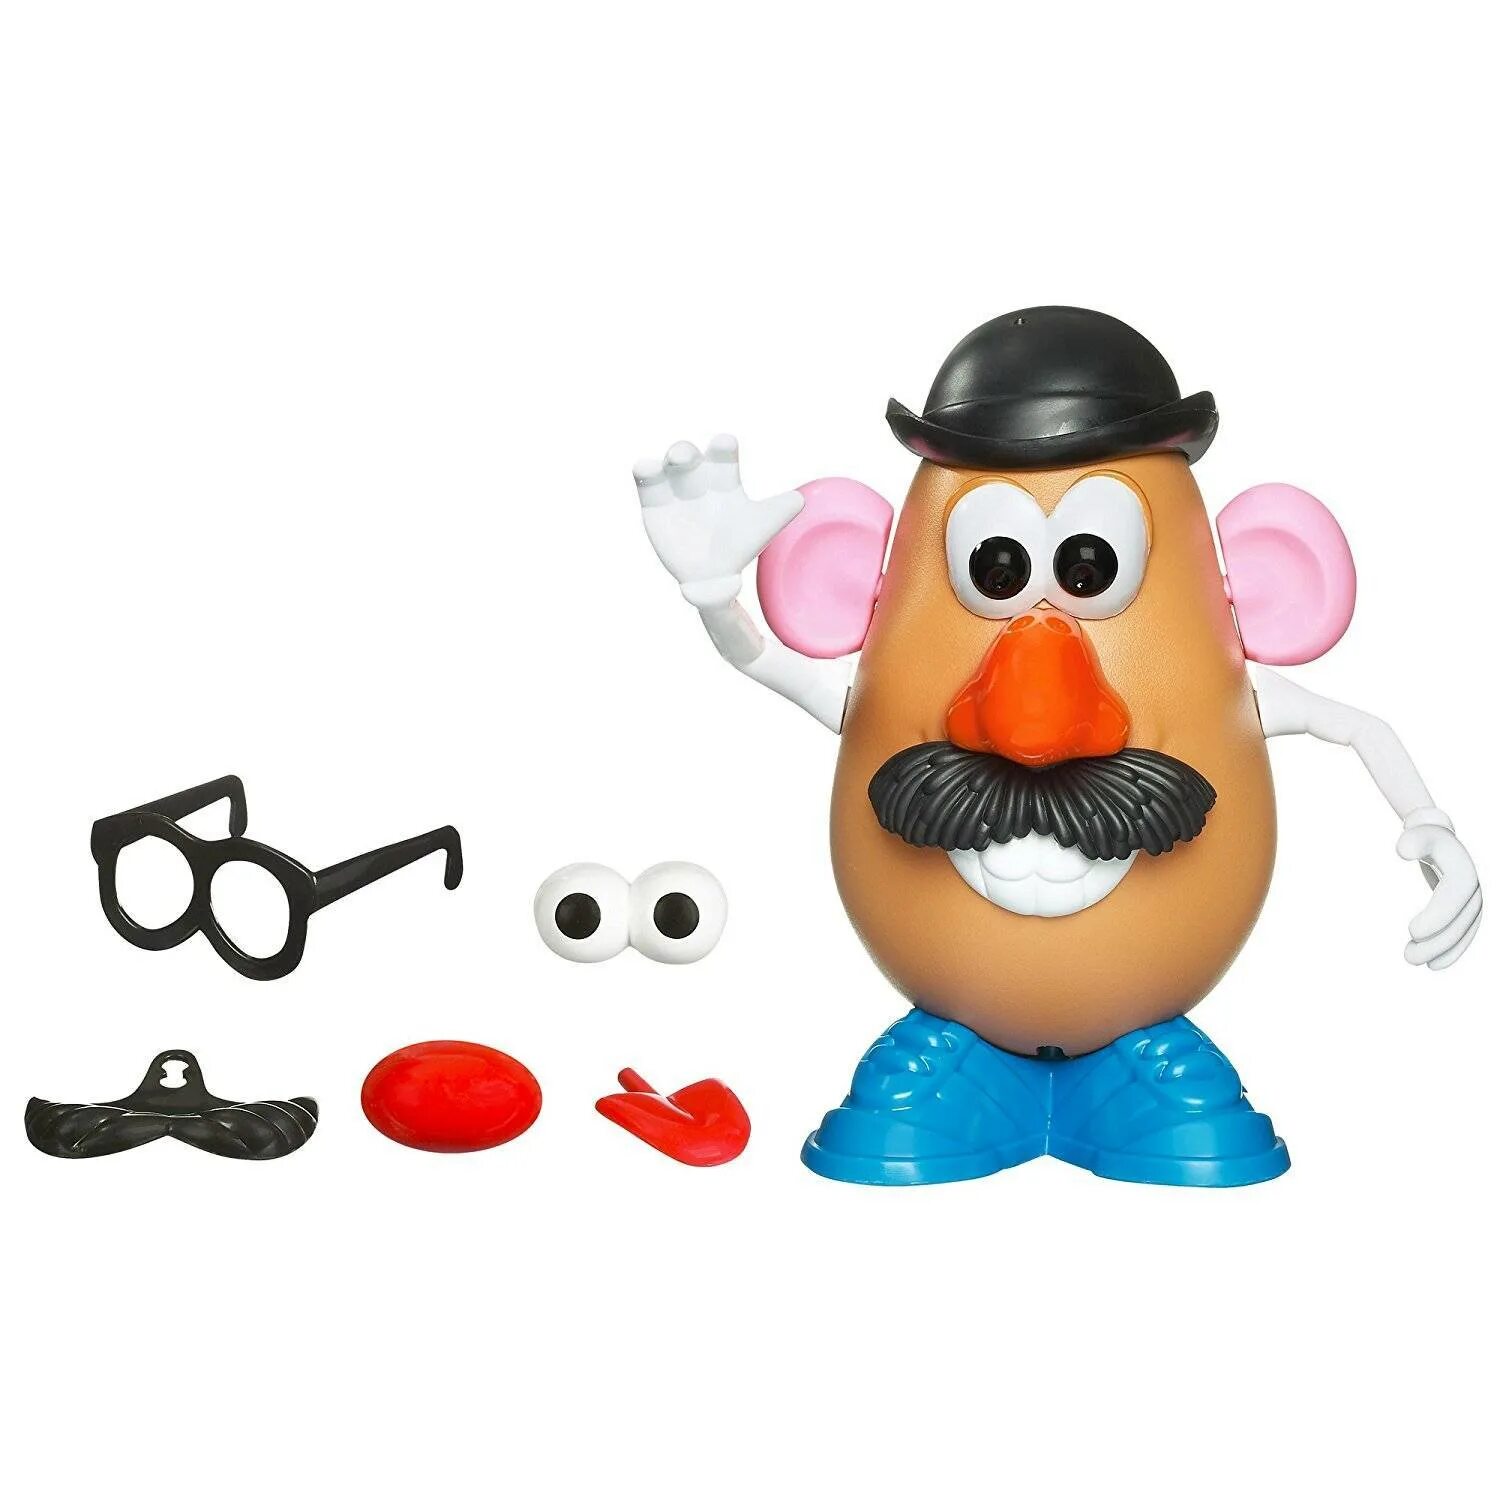 Mr potato. Mr Potato head игрушка. Мистер картофелина история игрушек. Hasbro Мистер картошка. Toy story collection картофельная голова Мистер.